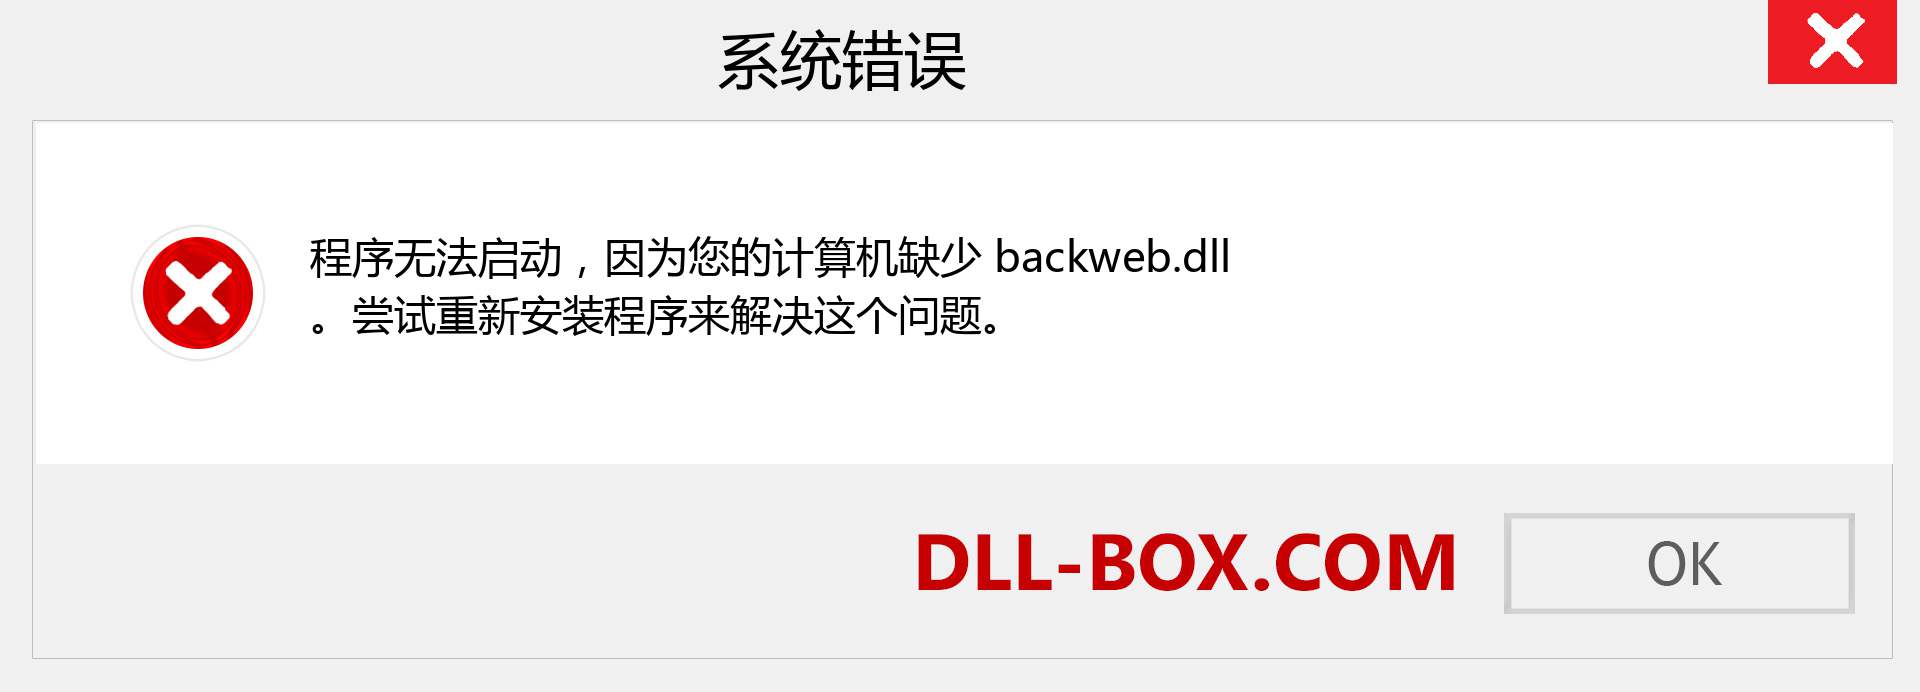 backweb.dll 文件丢失？。 适用于 Windows 7、8、10 的下载 - 修复 Windows、照片、图像上的 backweb dll 丢失错误